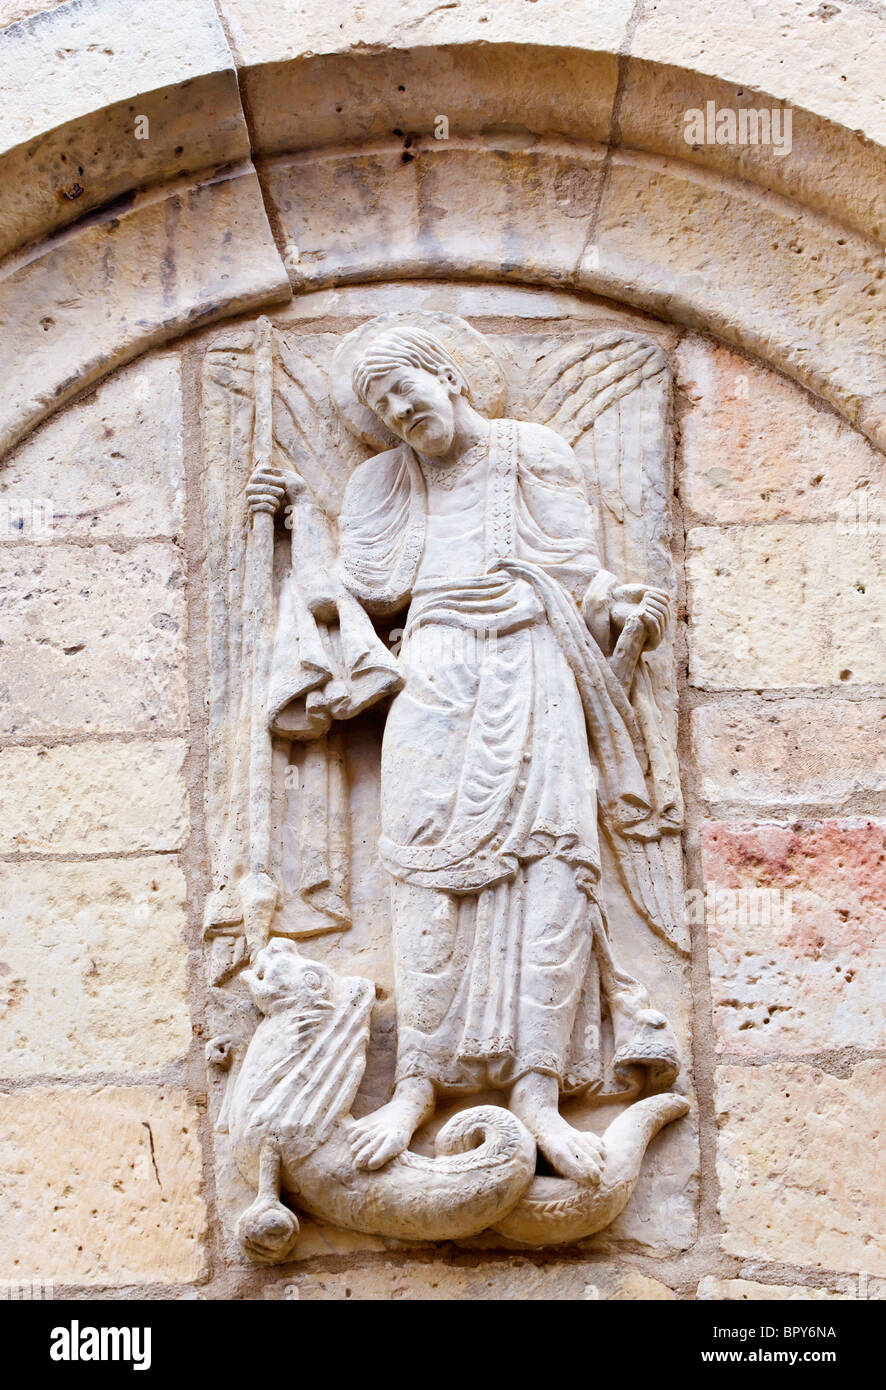 Segovia, Segovia Province, Spain. Statue on facade of Iglesia de San Miguel of Saint Michael wounding a dragon. Stock Photo